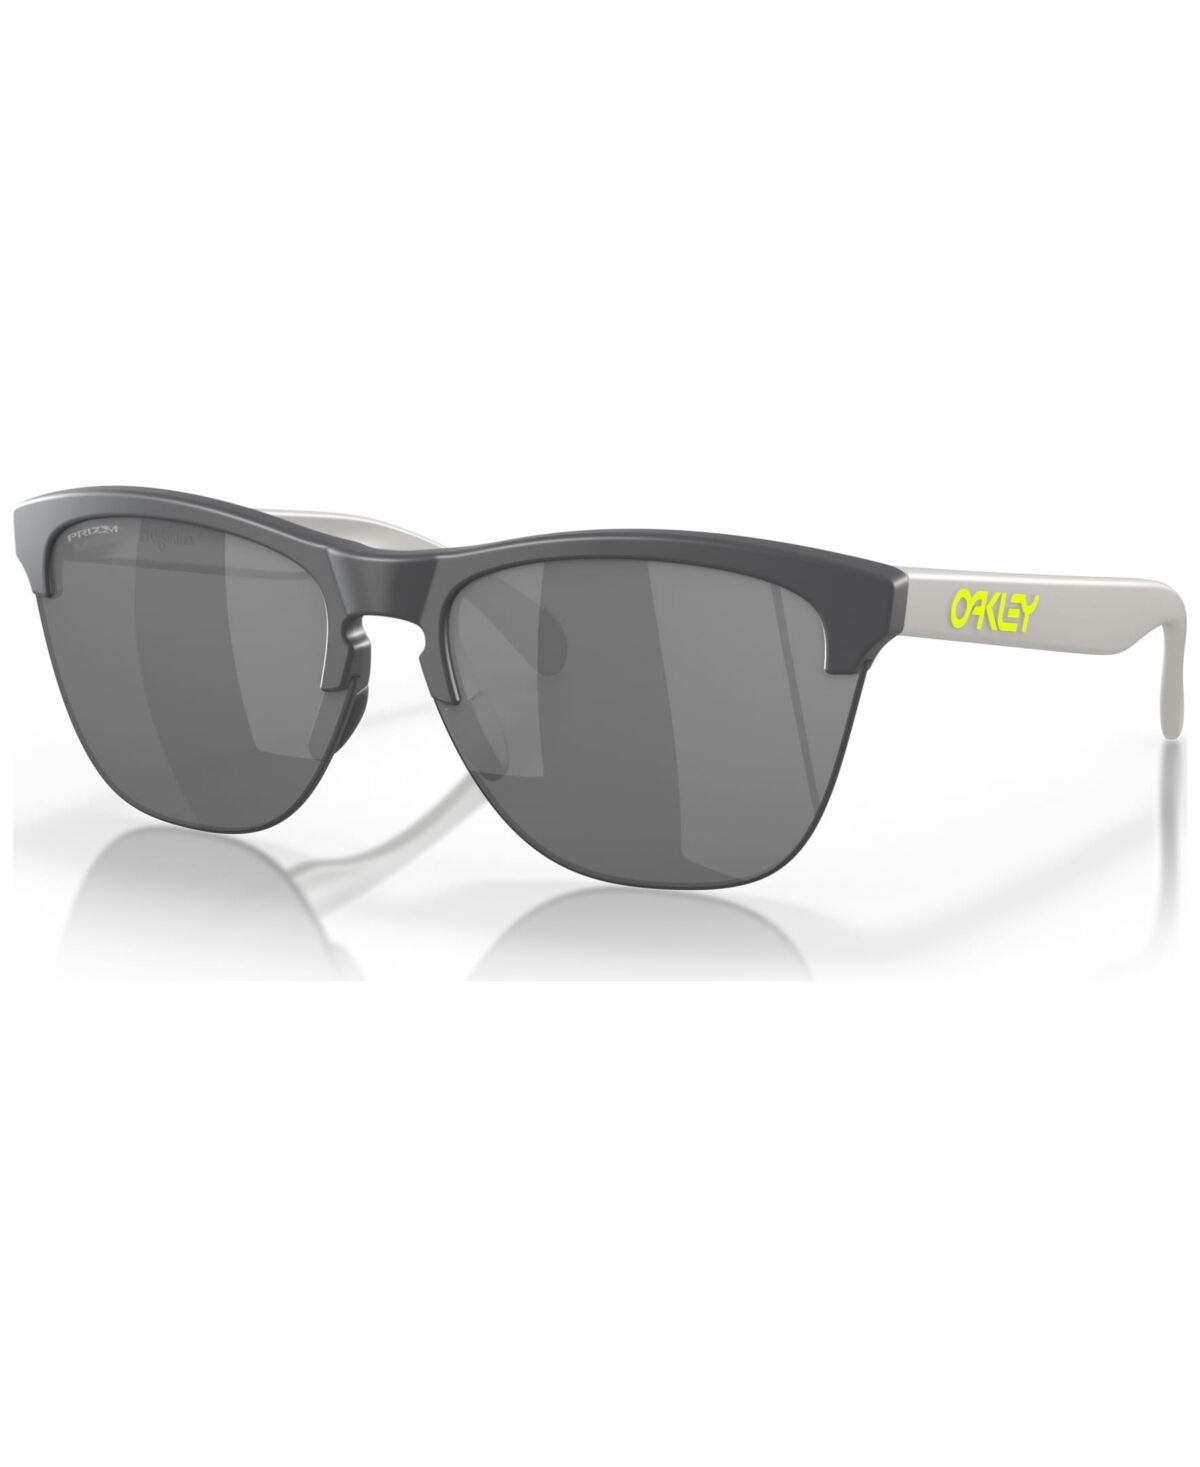 Oakley Men's Sunglasses, Frogskins Lite - Matte Dark Gray